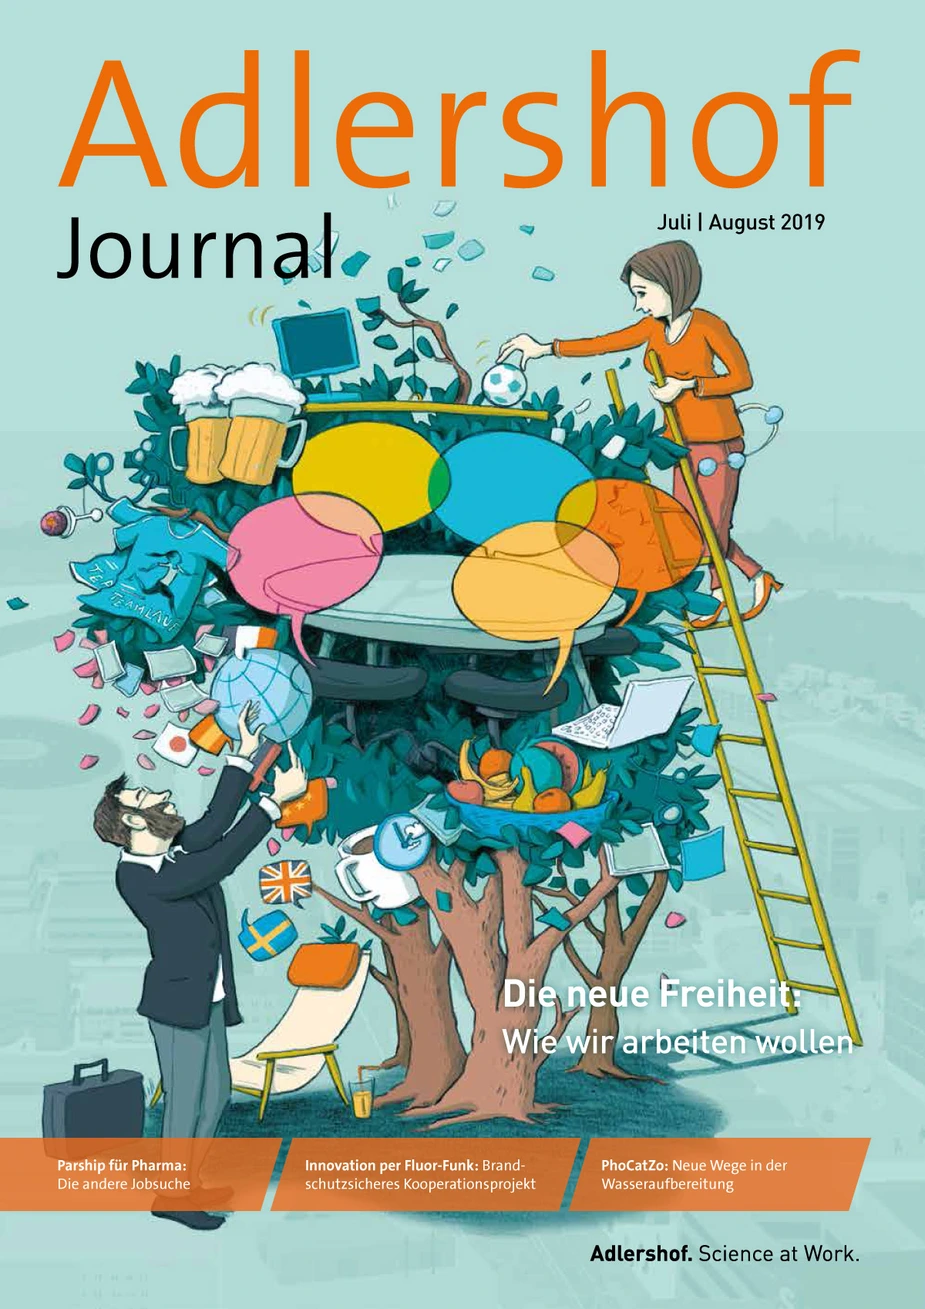 Adlershof Journal Cover